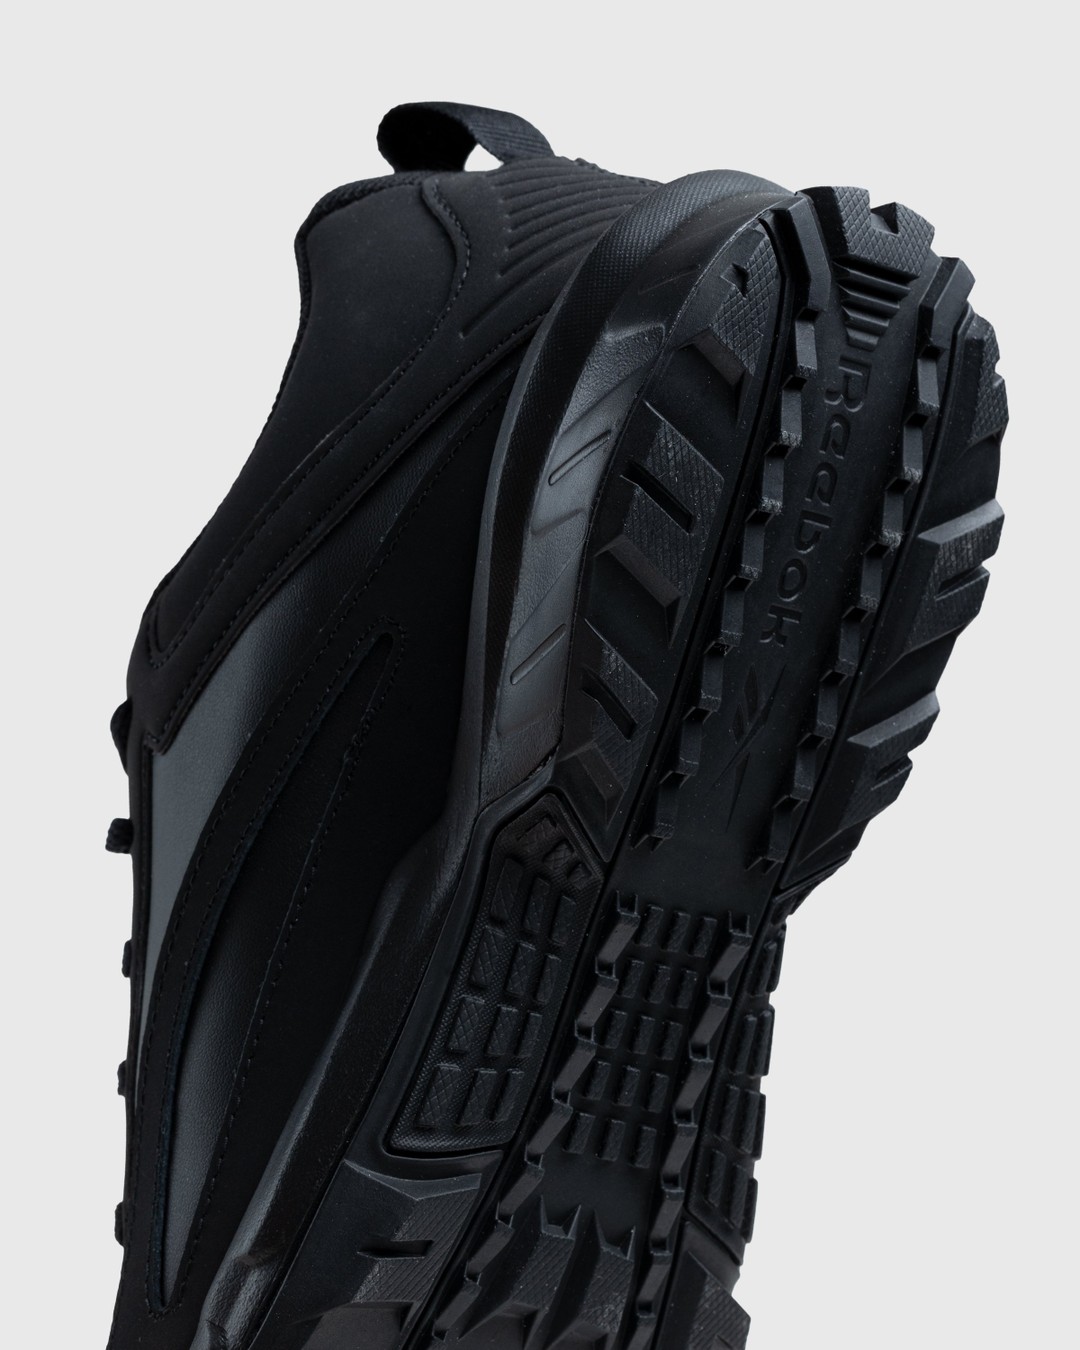 Reebok – Ridgerider 6.0 Leather Black - Sneakers - Black - Image 6